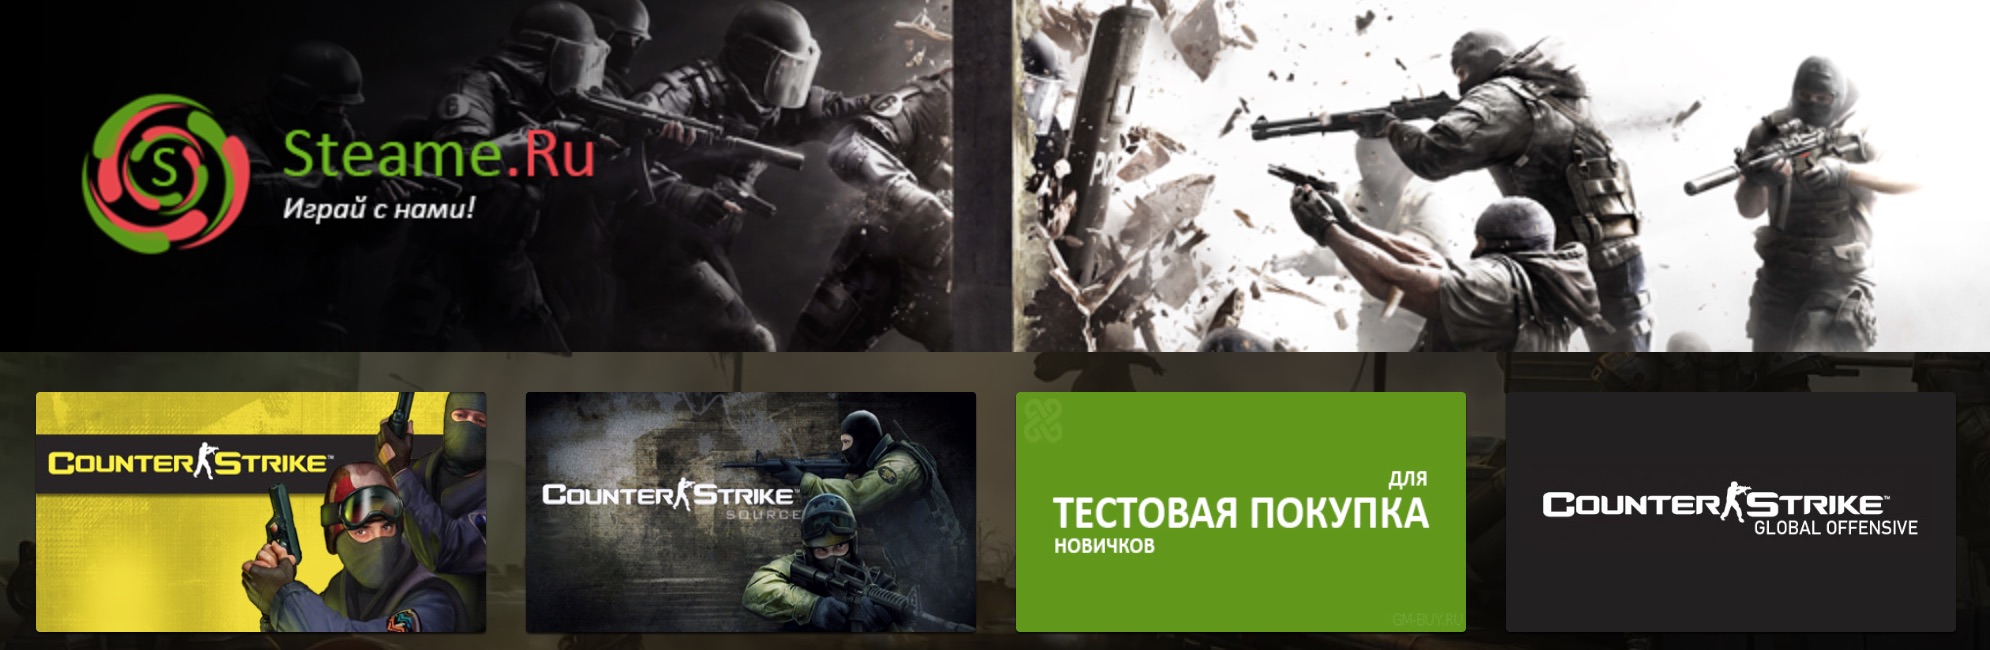 Игровые аккаунты по выгодным ценам — steame.ru